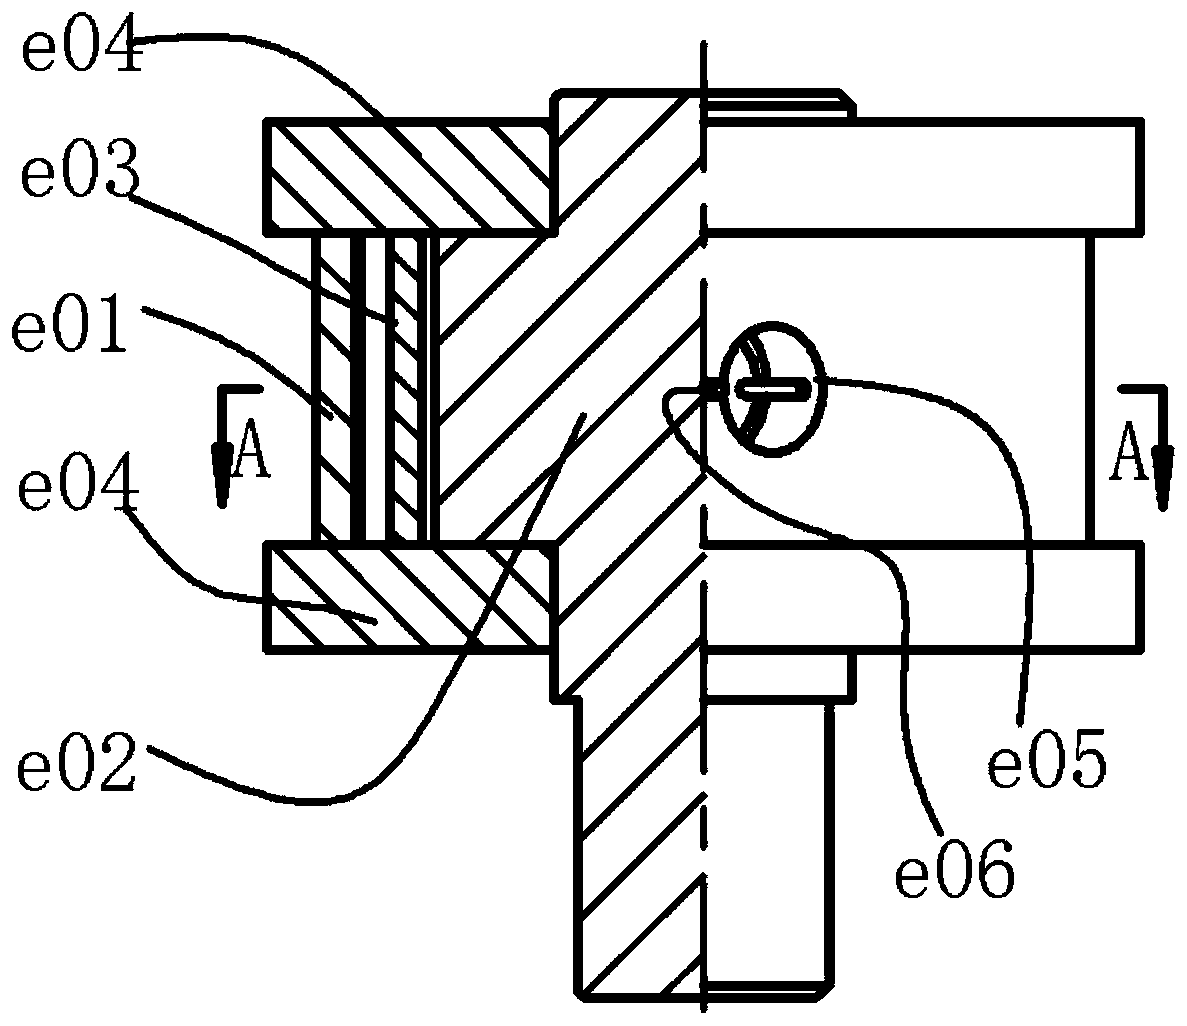 A Pendulum Block Matching Cam Rotor Internal Combustion Engine Power System